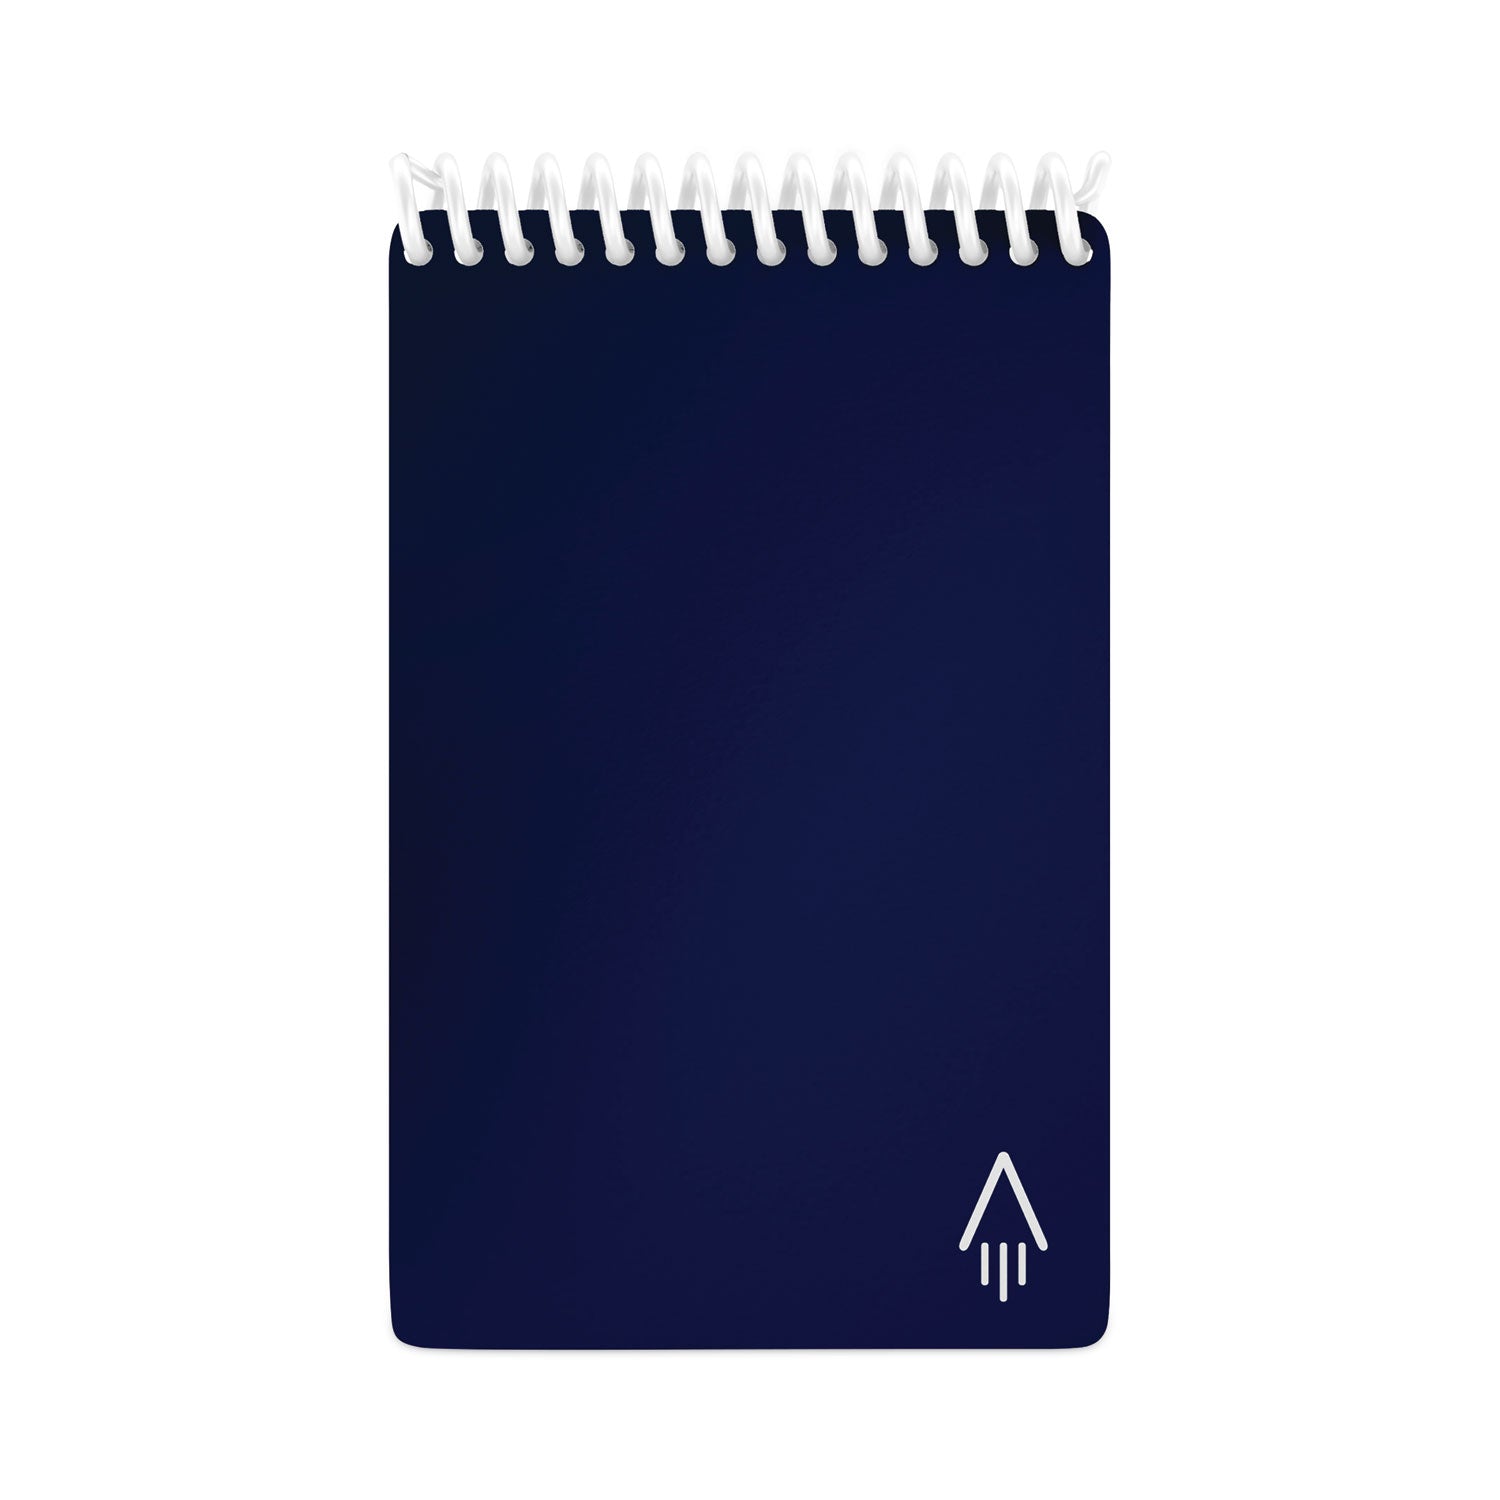 mini-notepad-midnight-blue-cover-dot-grid-rule-3-x-55-white-24-sheets_rkbevrmrcdf - 2